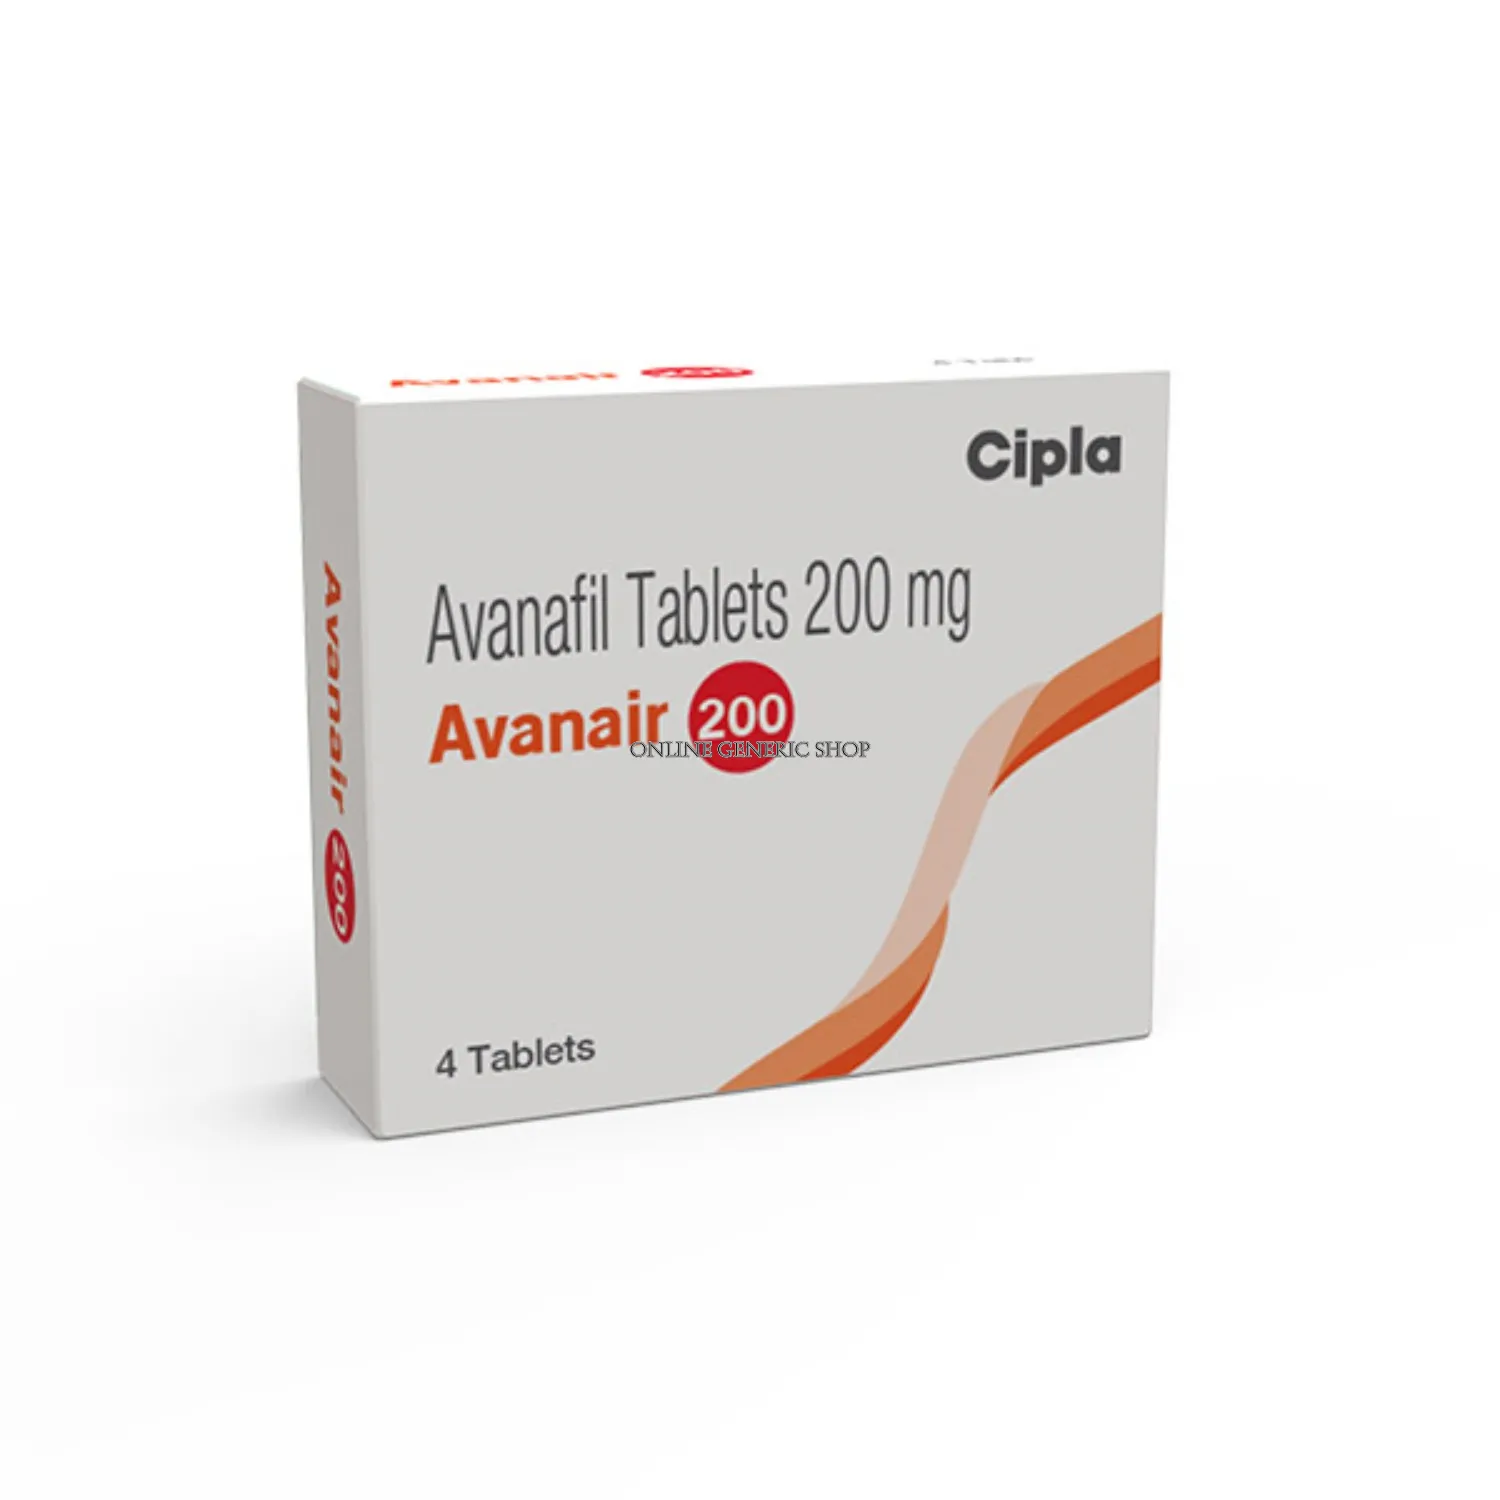 avanair-200-mg                    